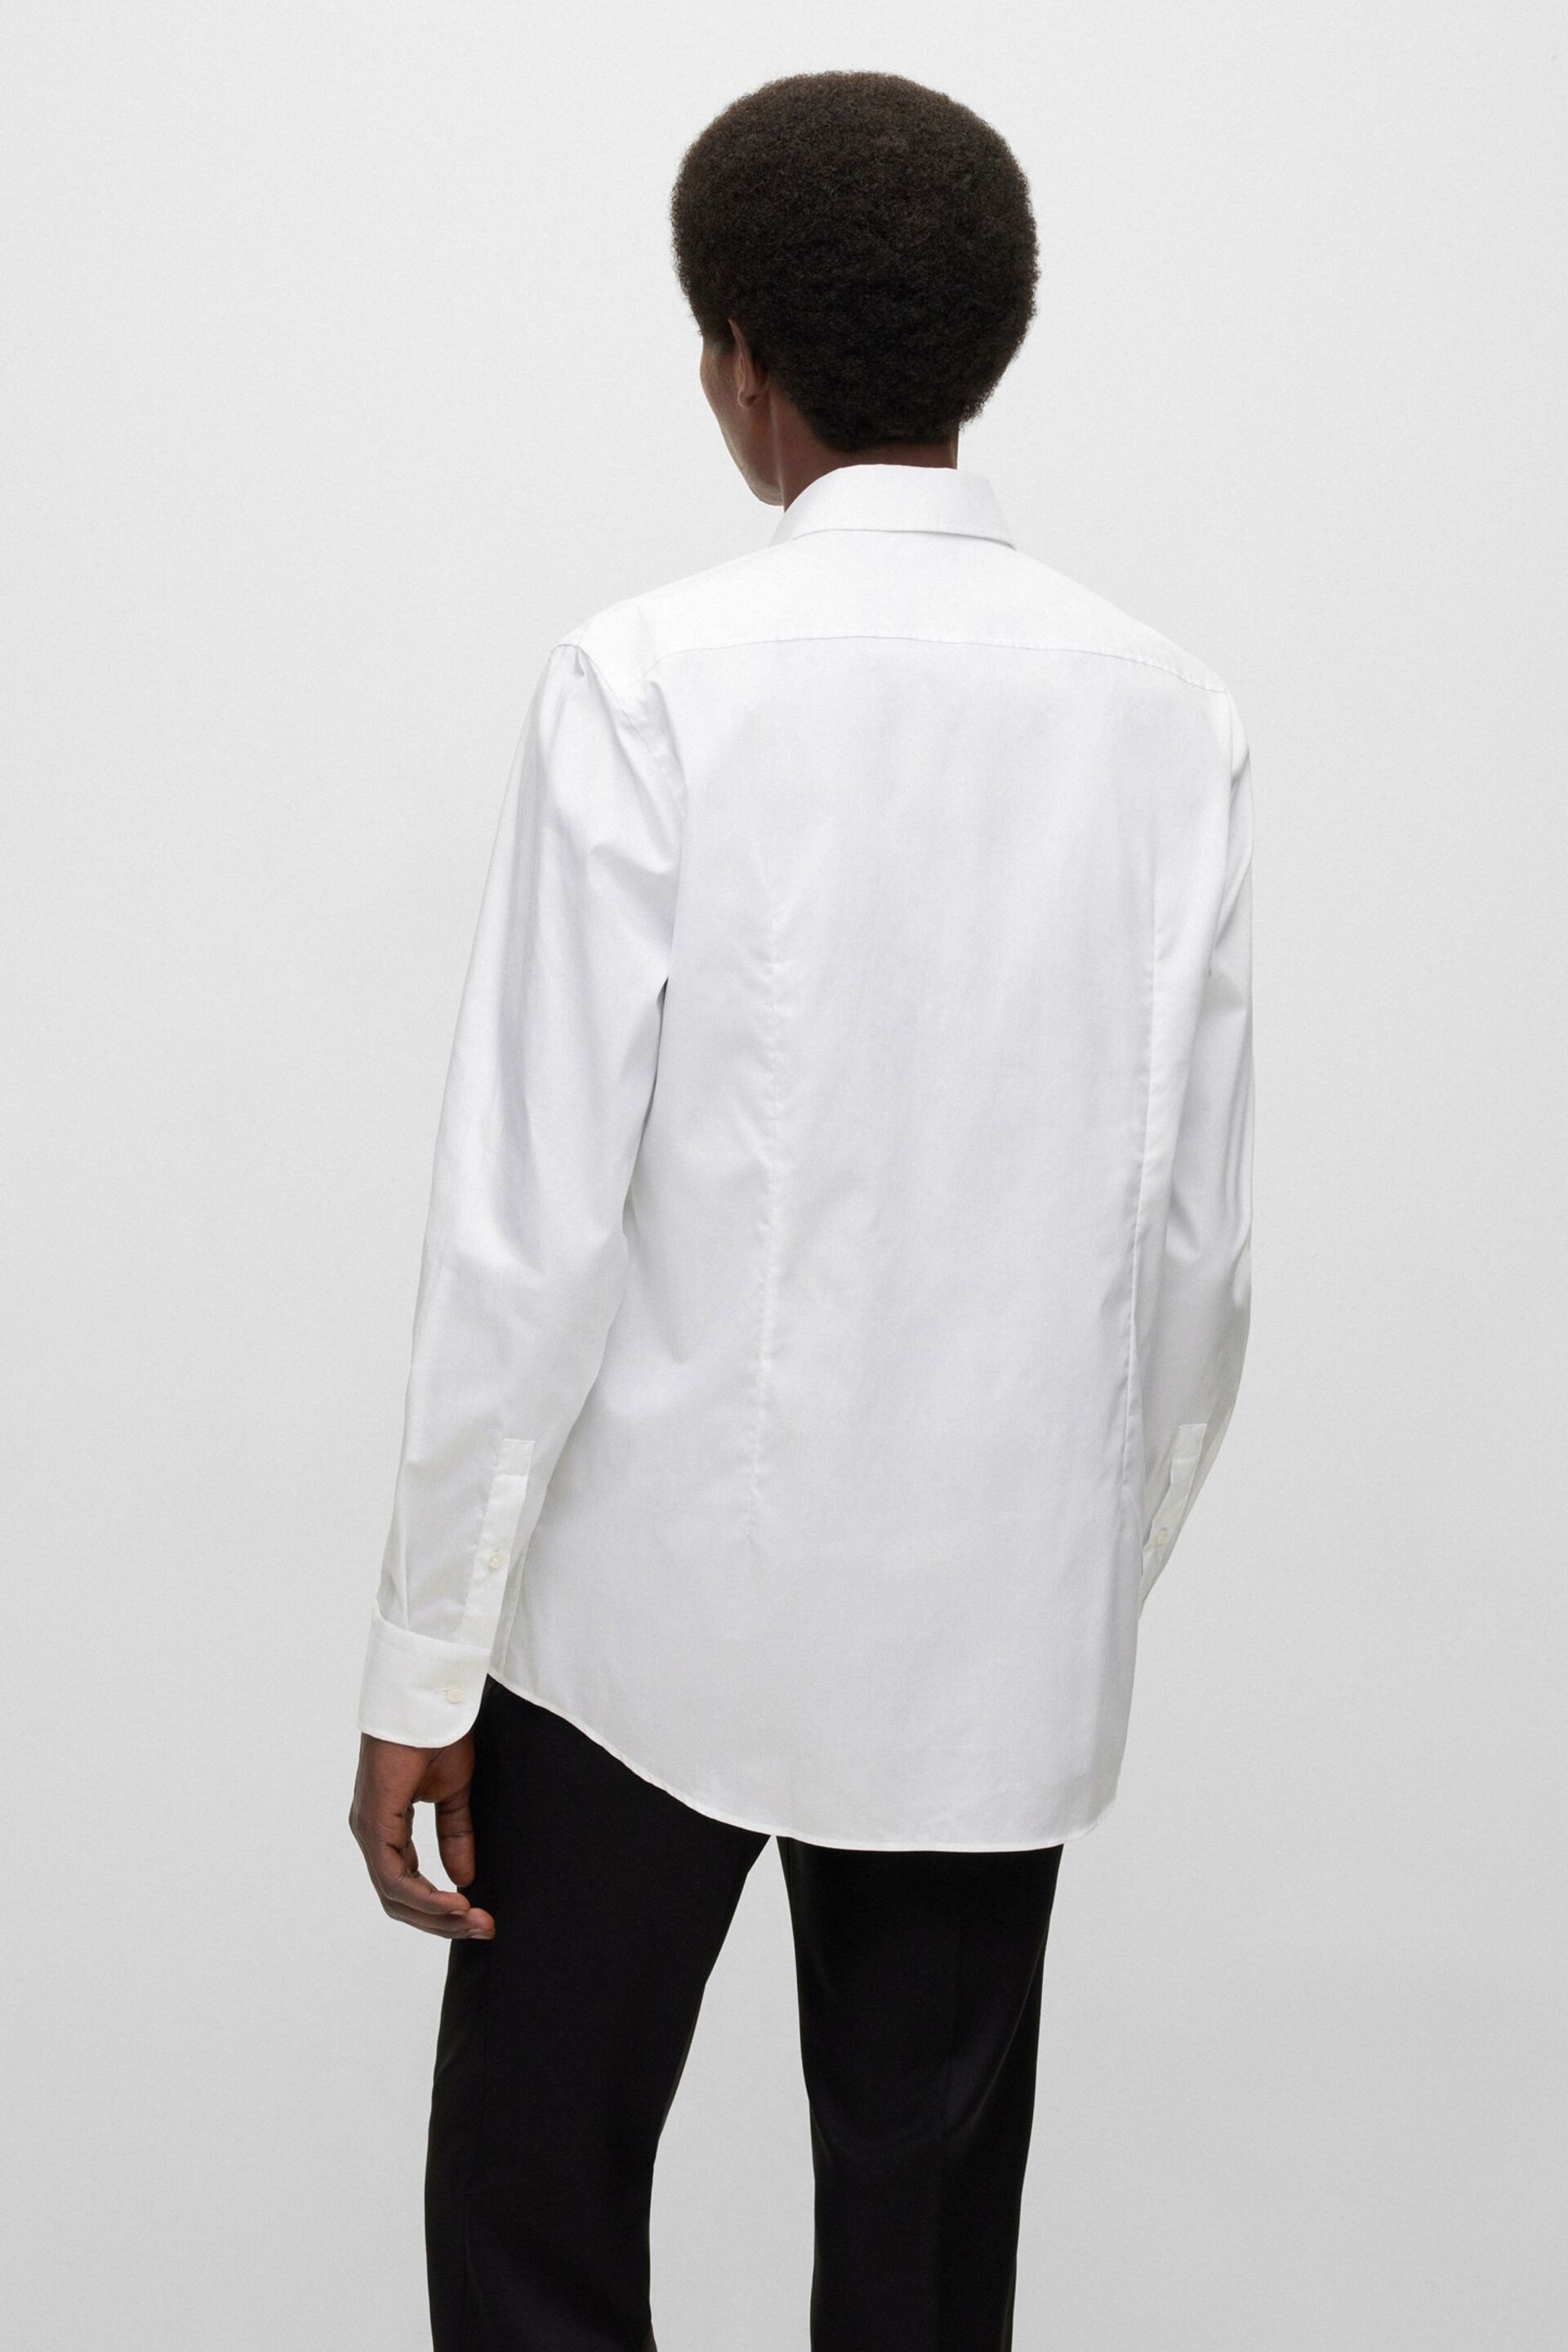 BOSS White Slim Fit Dress Shirt - Image 3 of 5